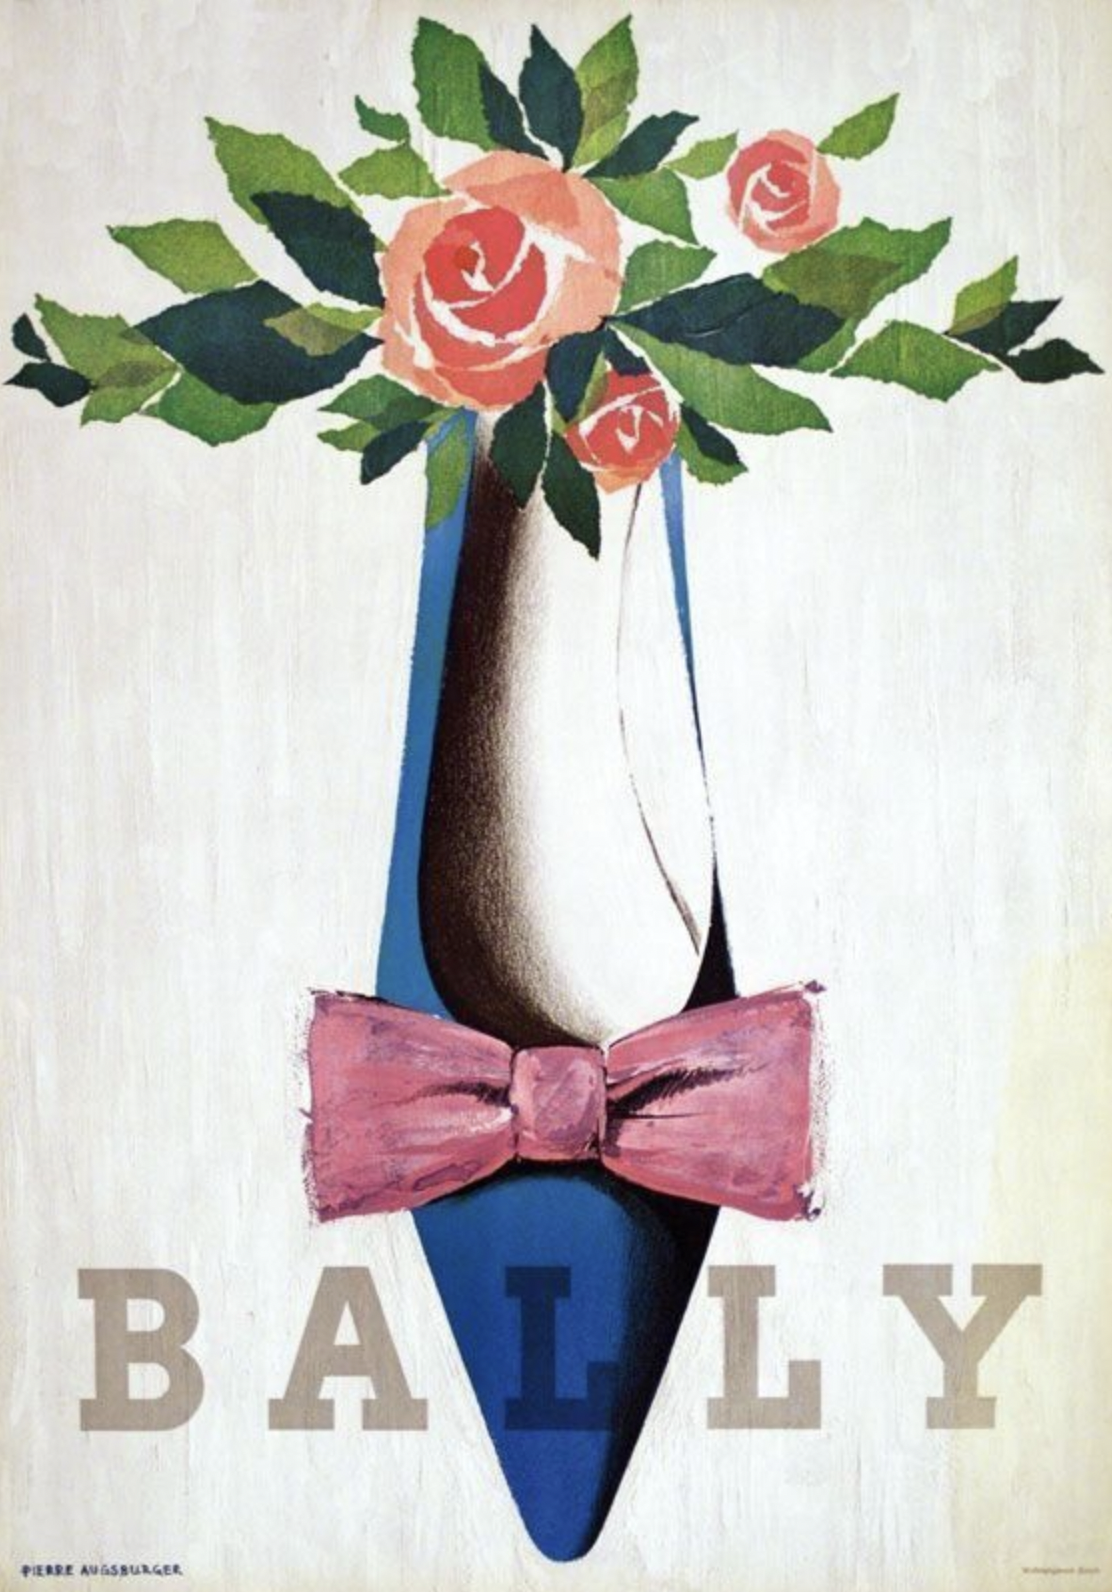 Bally Pierre Augsburger 1961 Original Vintage Poster